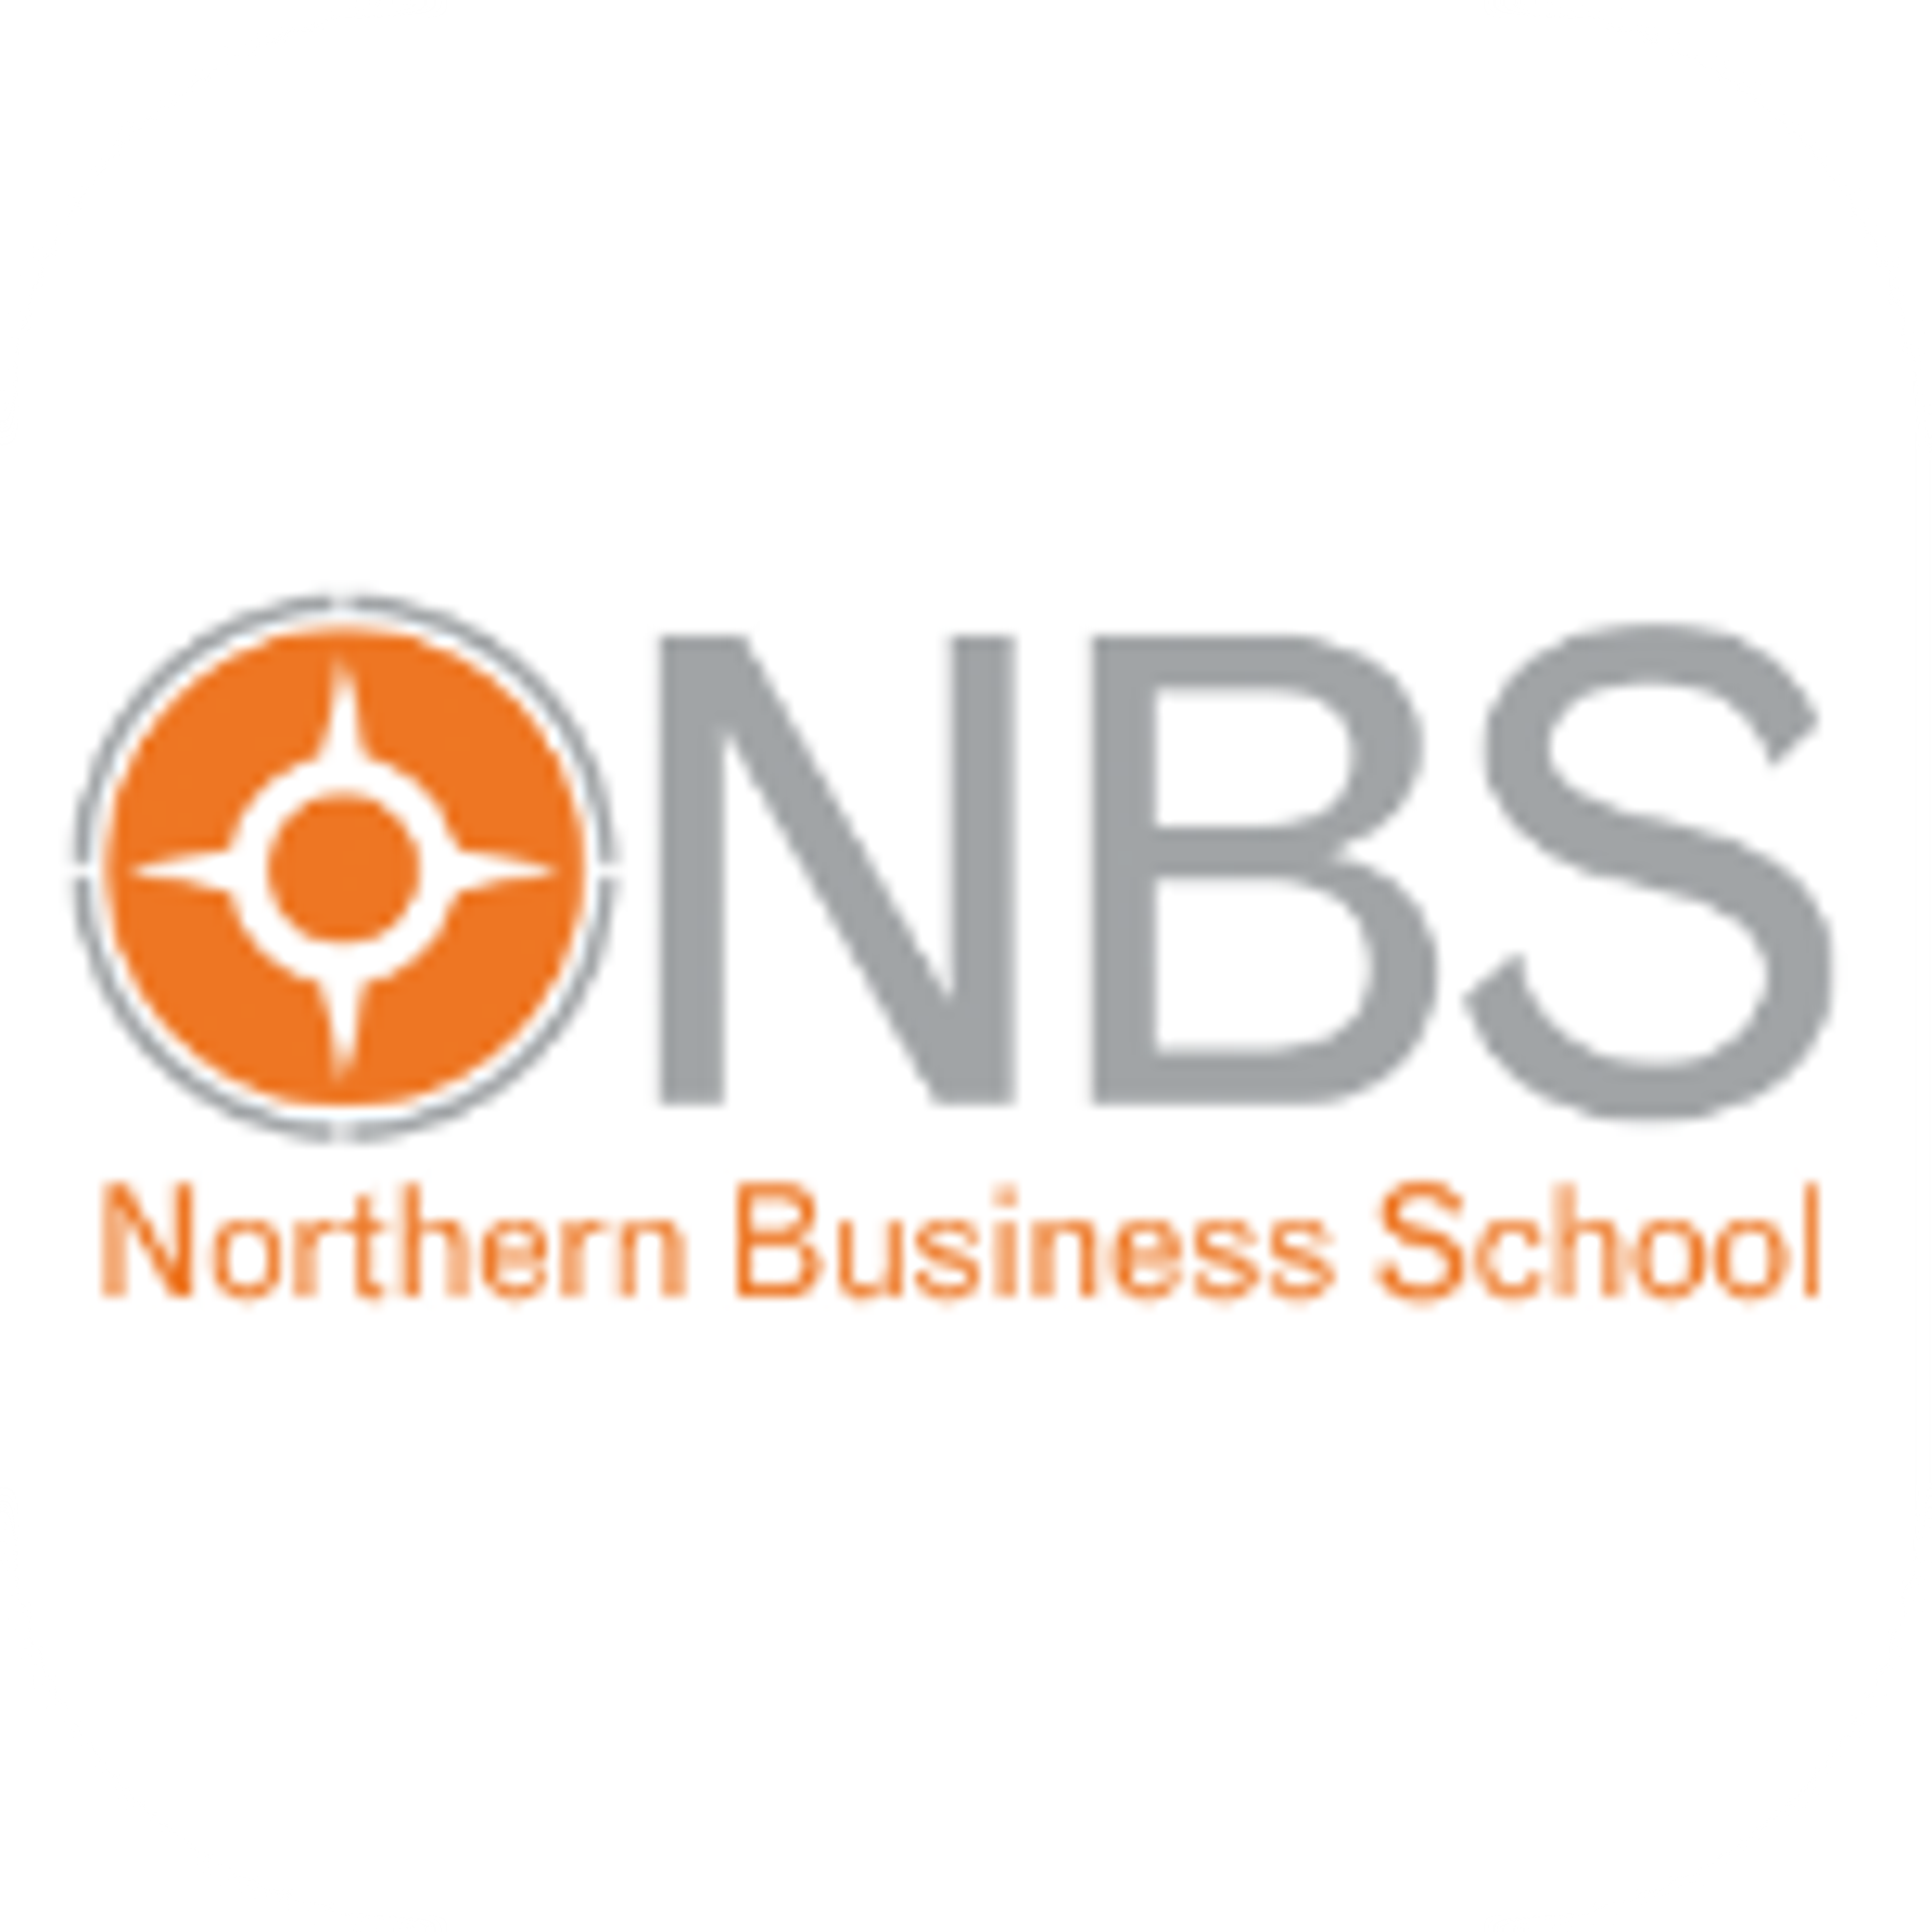 Northern Business School